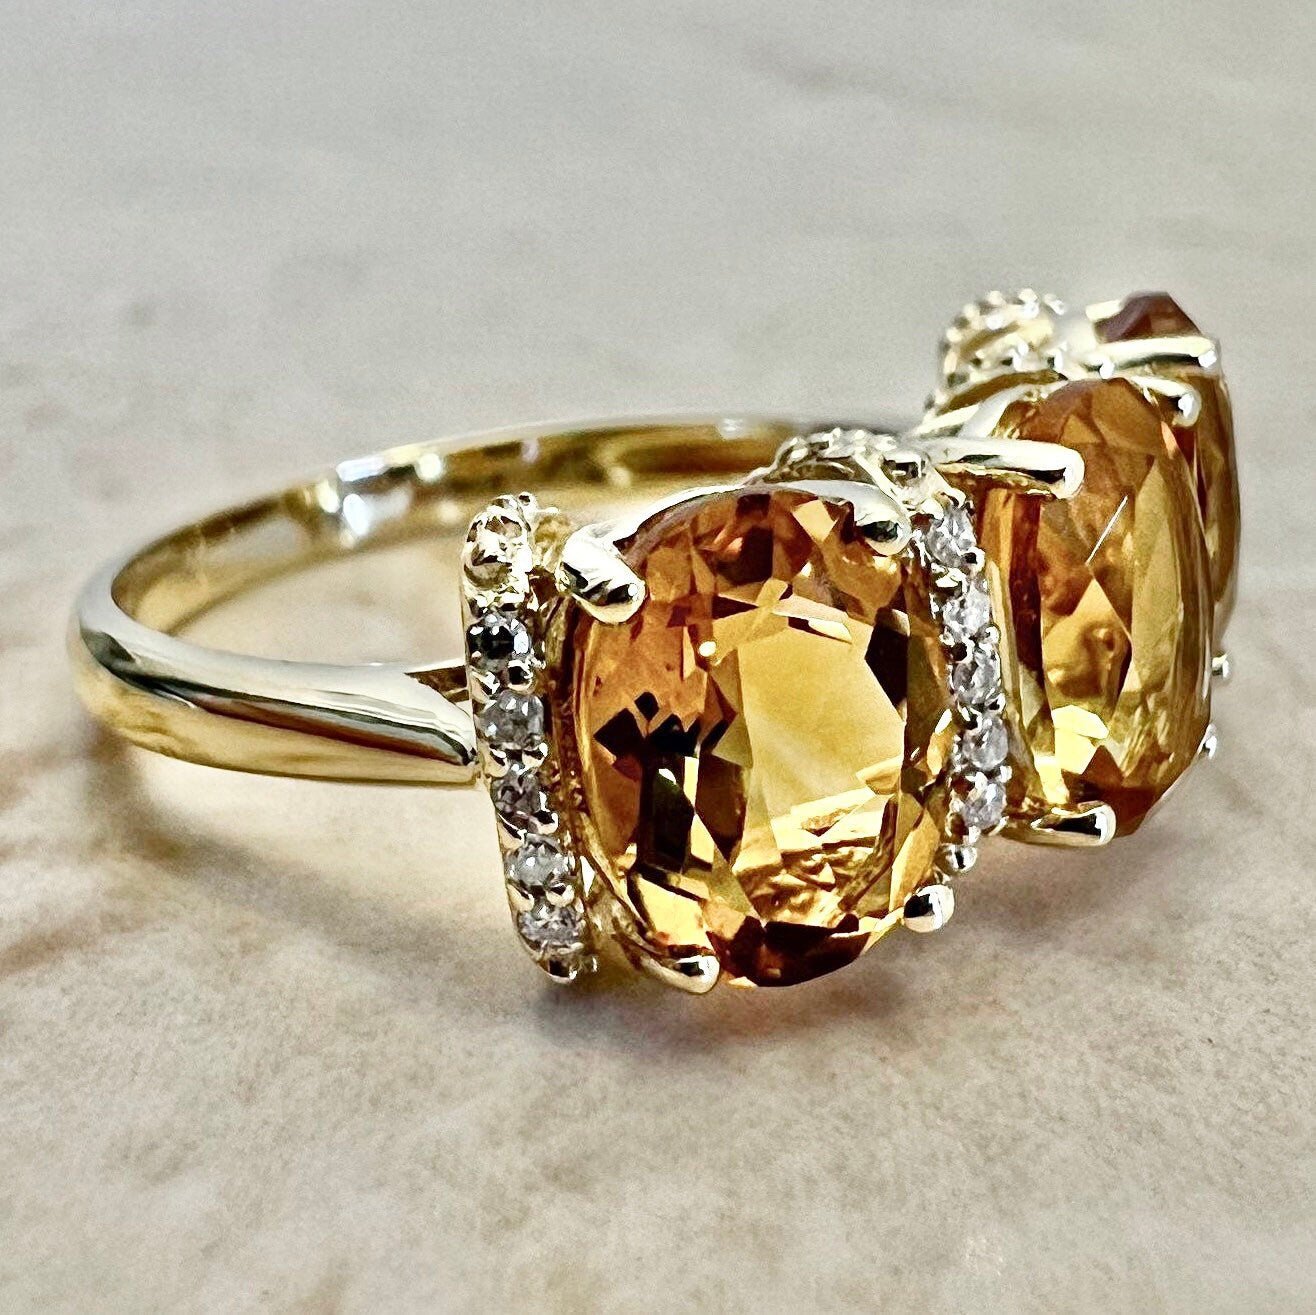 14K Oval Citrine & Diamond Cocktail Ring - Yellow Gold - November Birthstone - Gold Citrine Ring - Size 7 - Birthday Gift